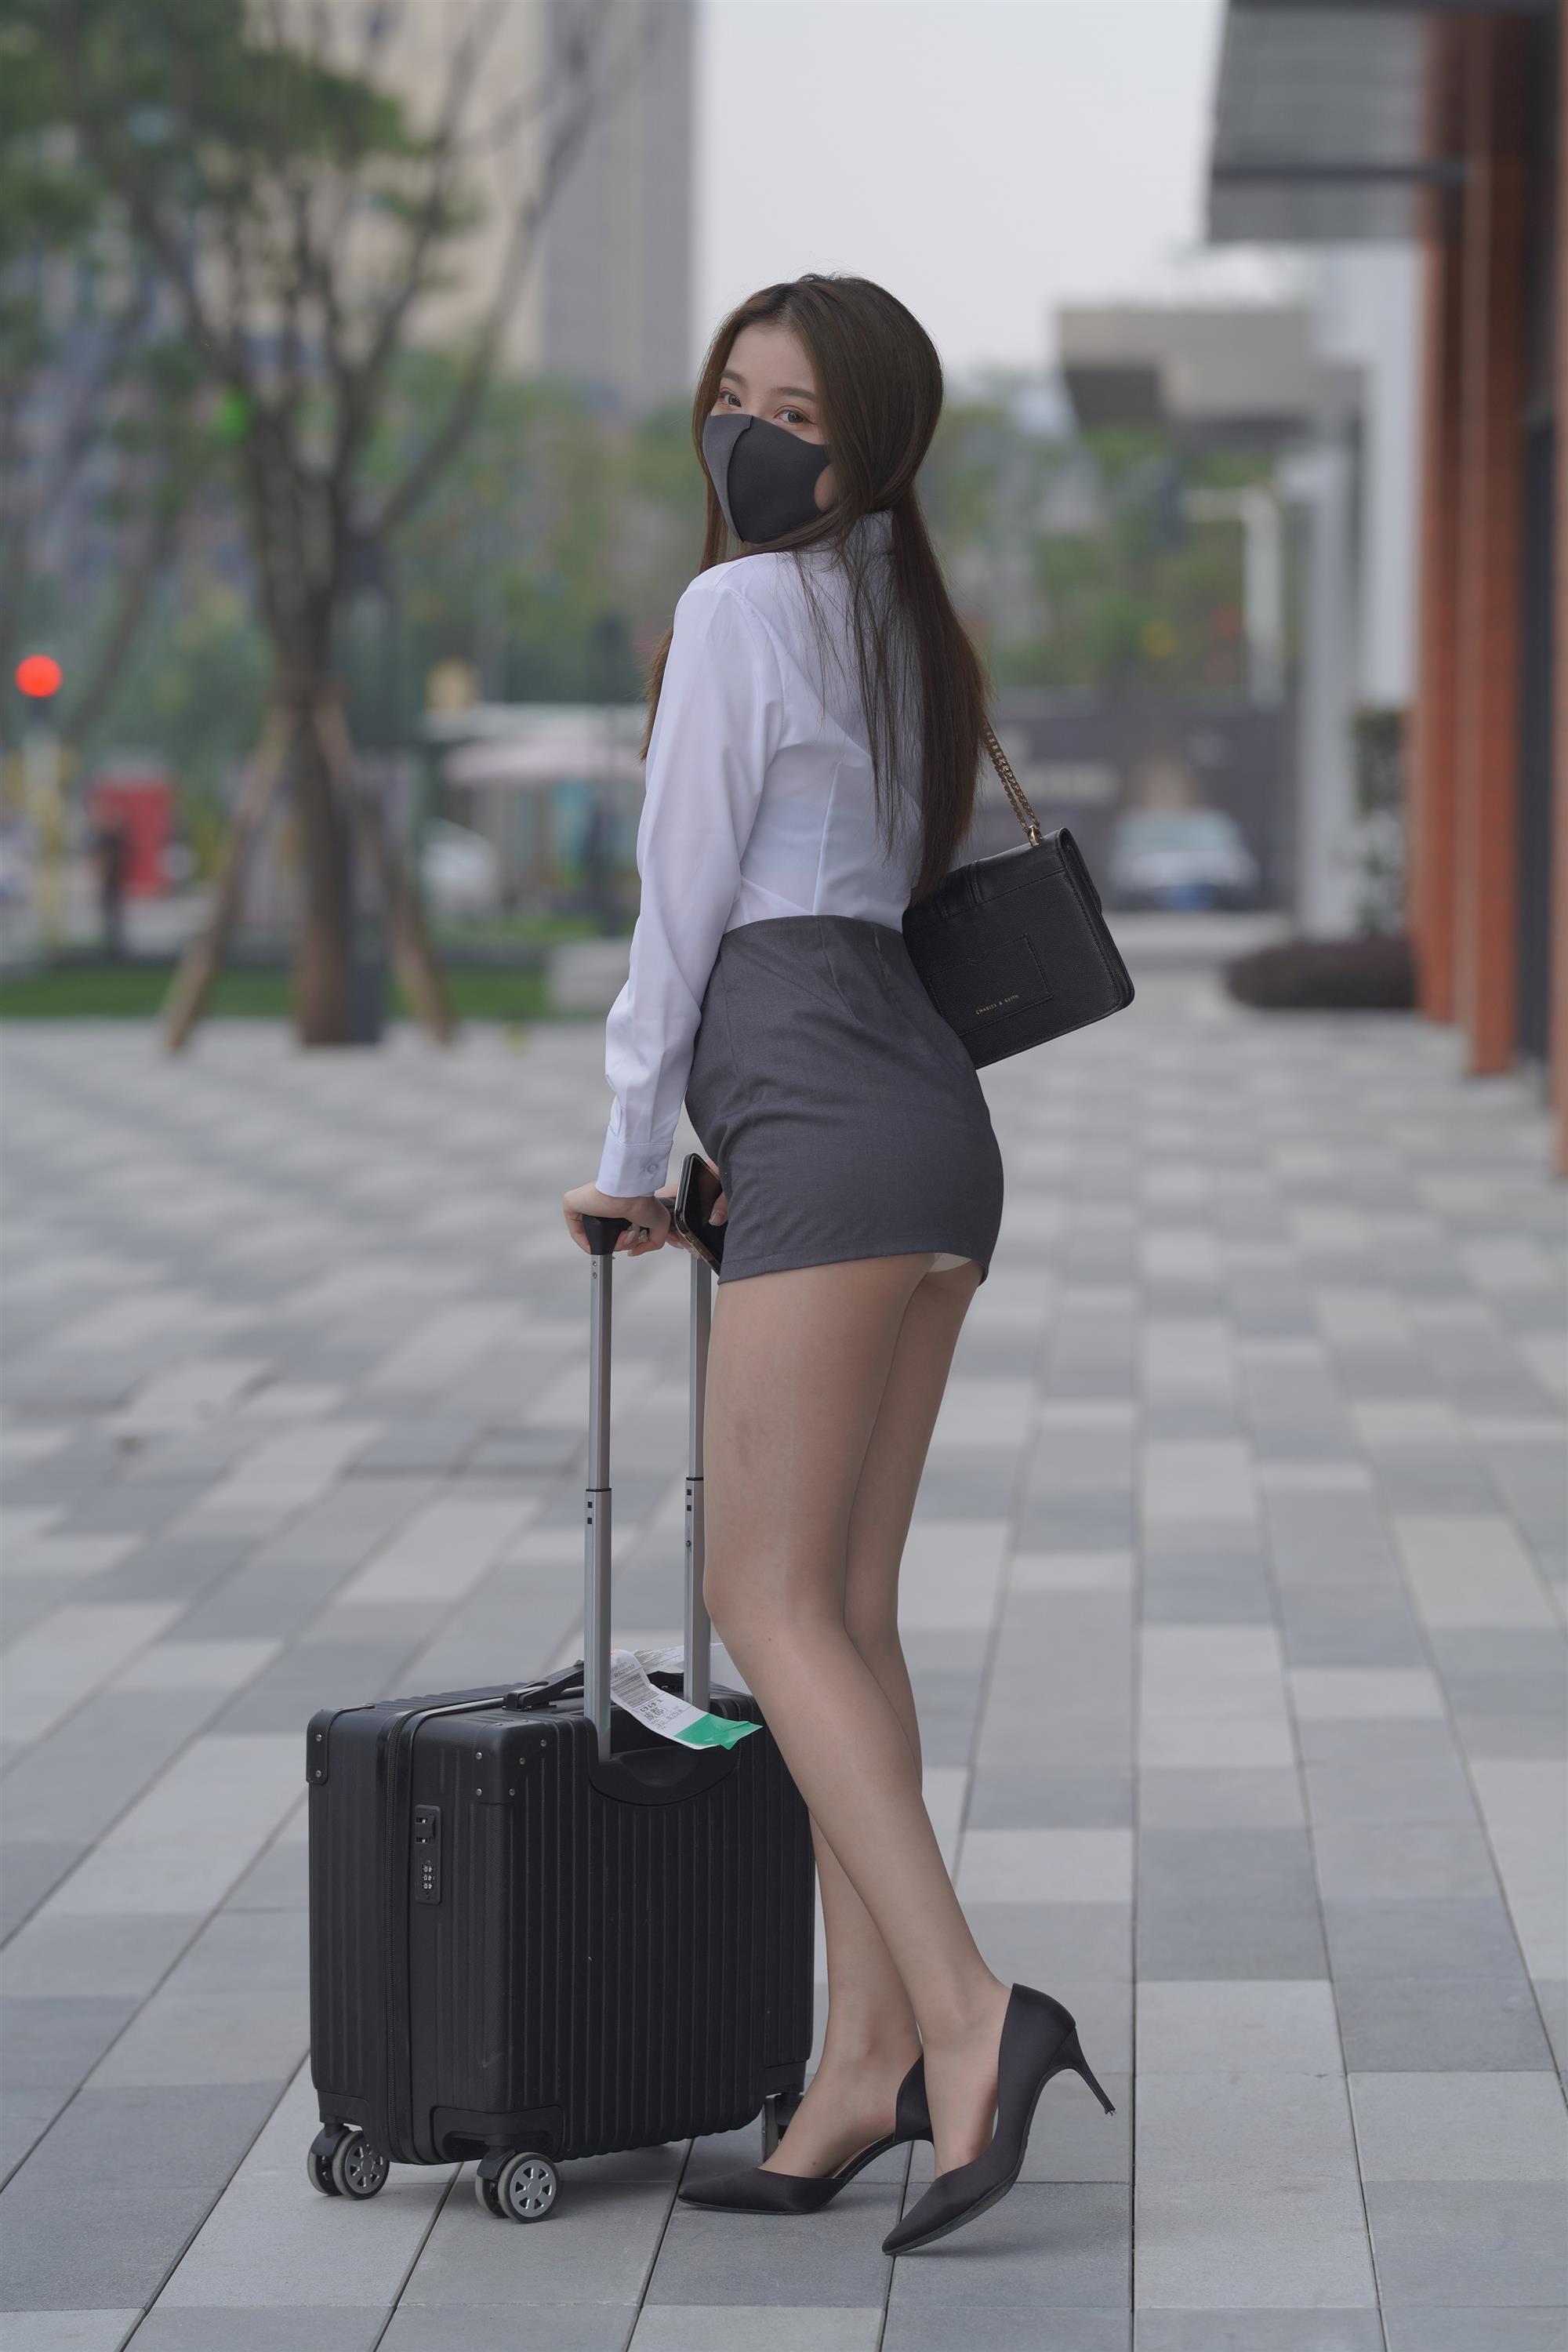 Street White shirt miniskirt high heels - 168.jpg